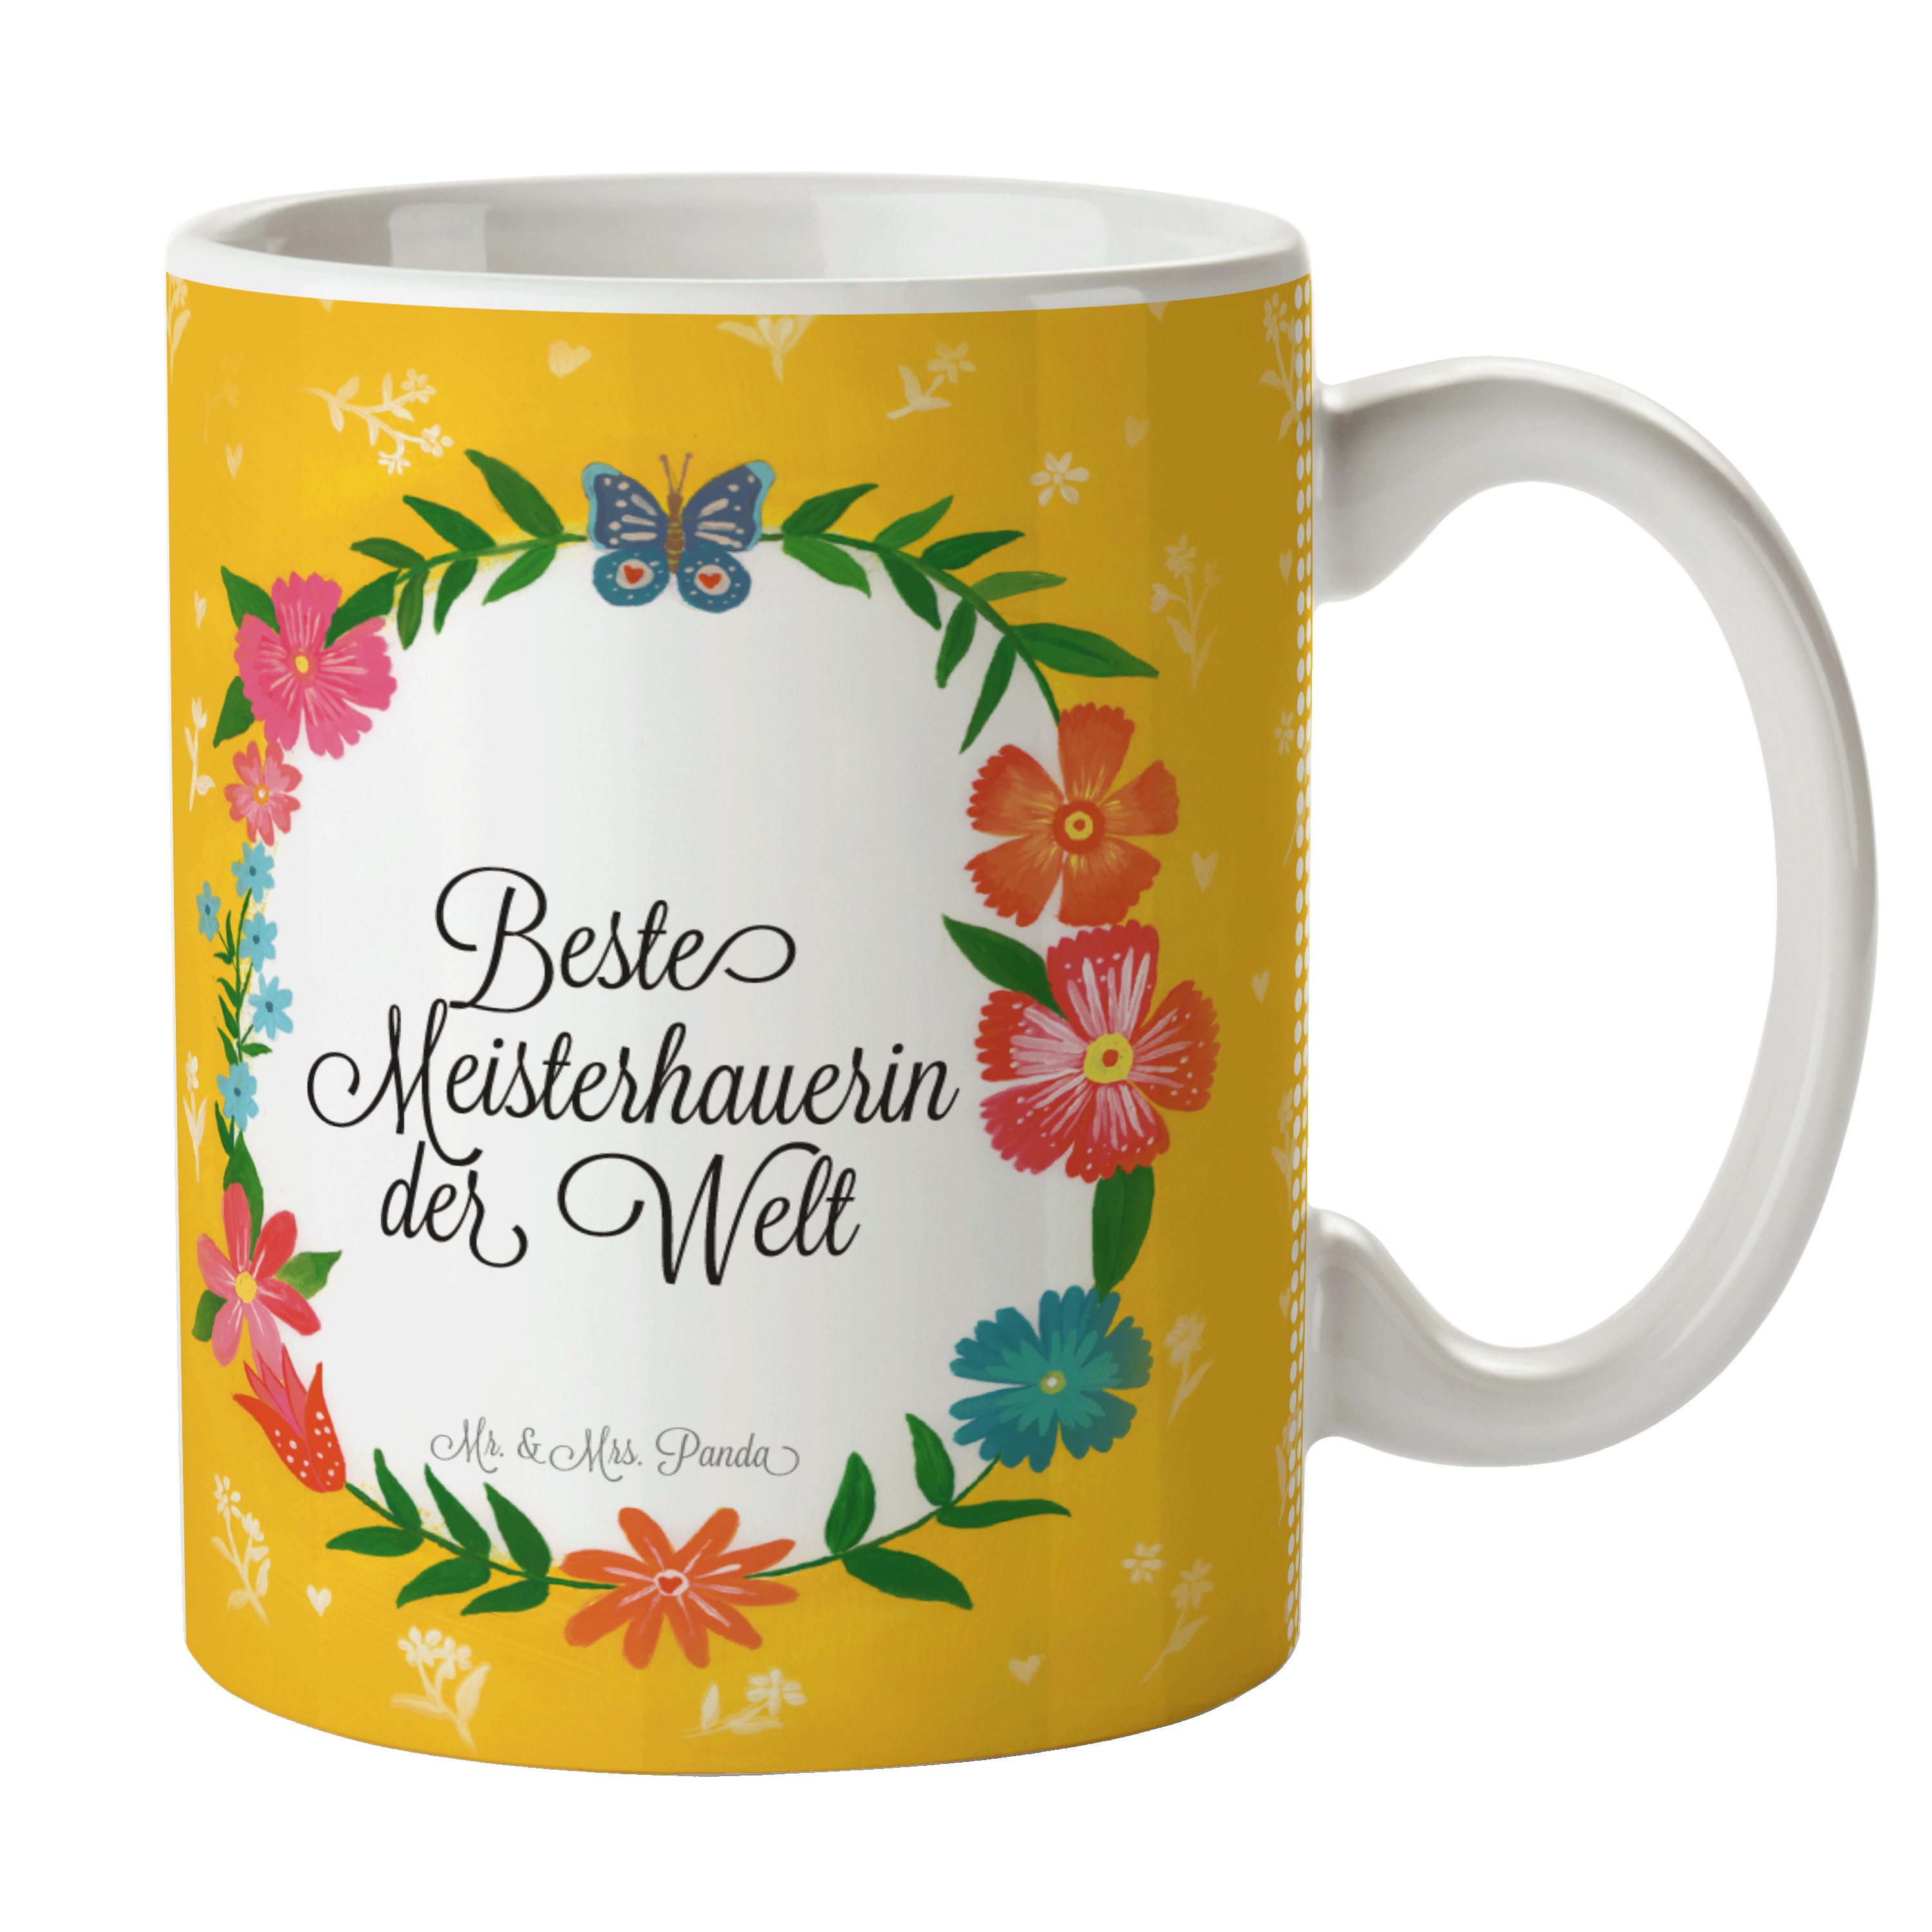 Mr. & Mrs. Kaffee, Gratulation, Meisterhauerin Tasse Keramik Geschenk, - Panda Porzellantasse, Tasse